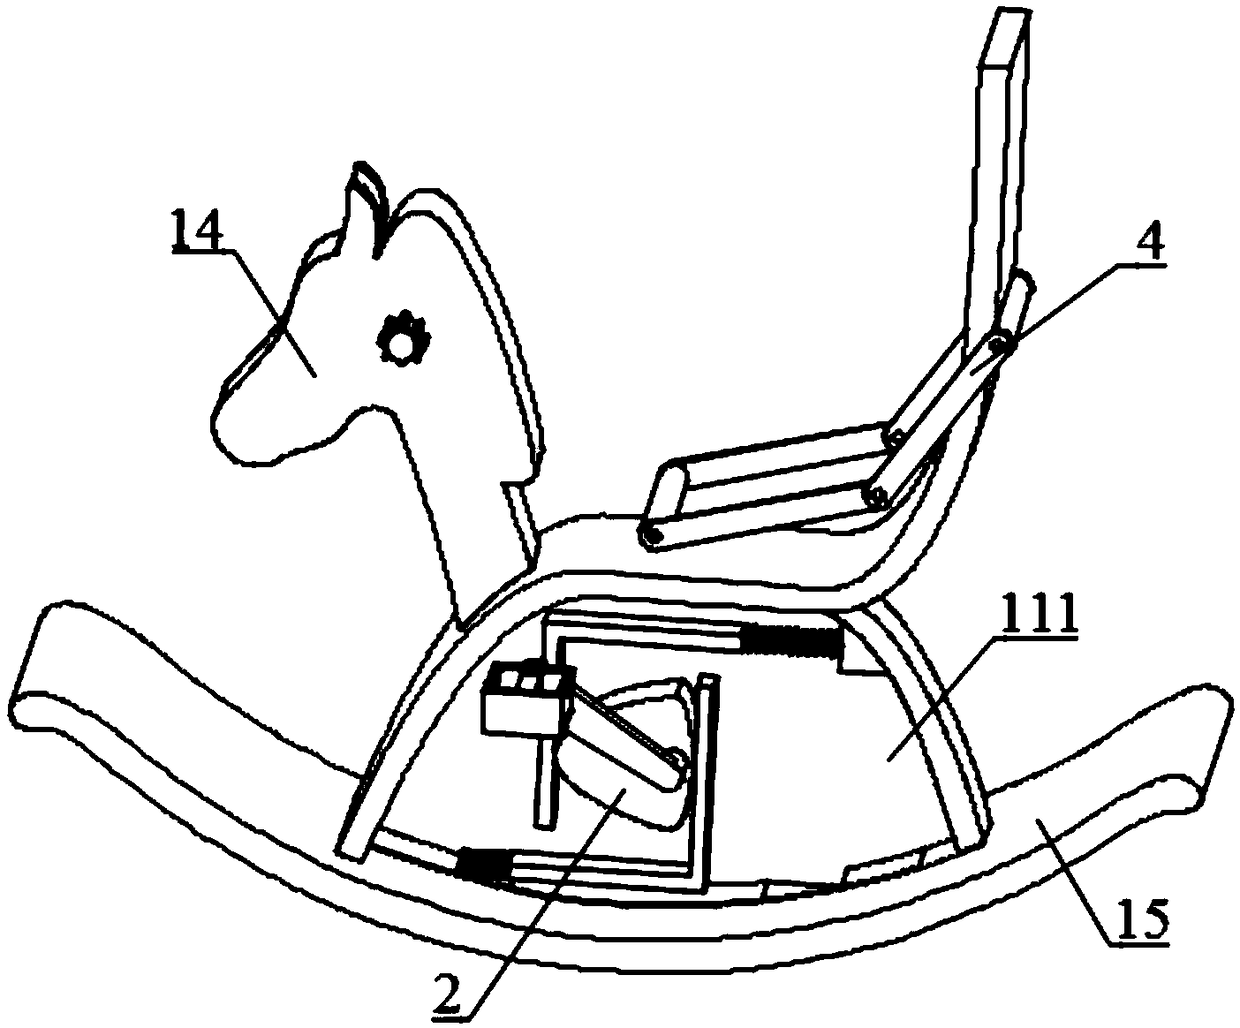 Body-building type rocking horse